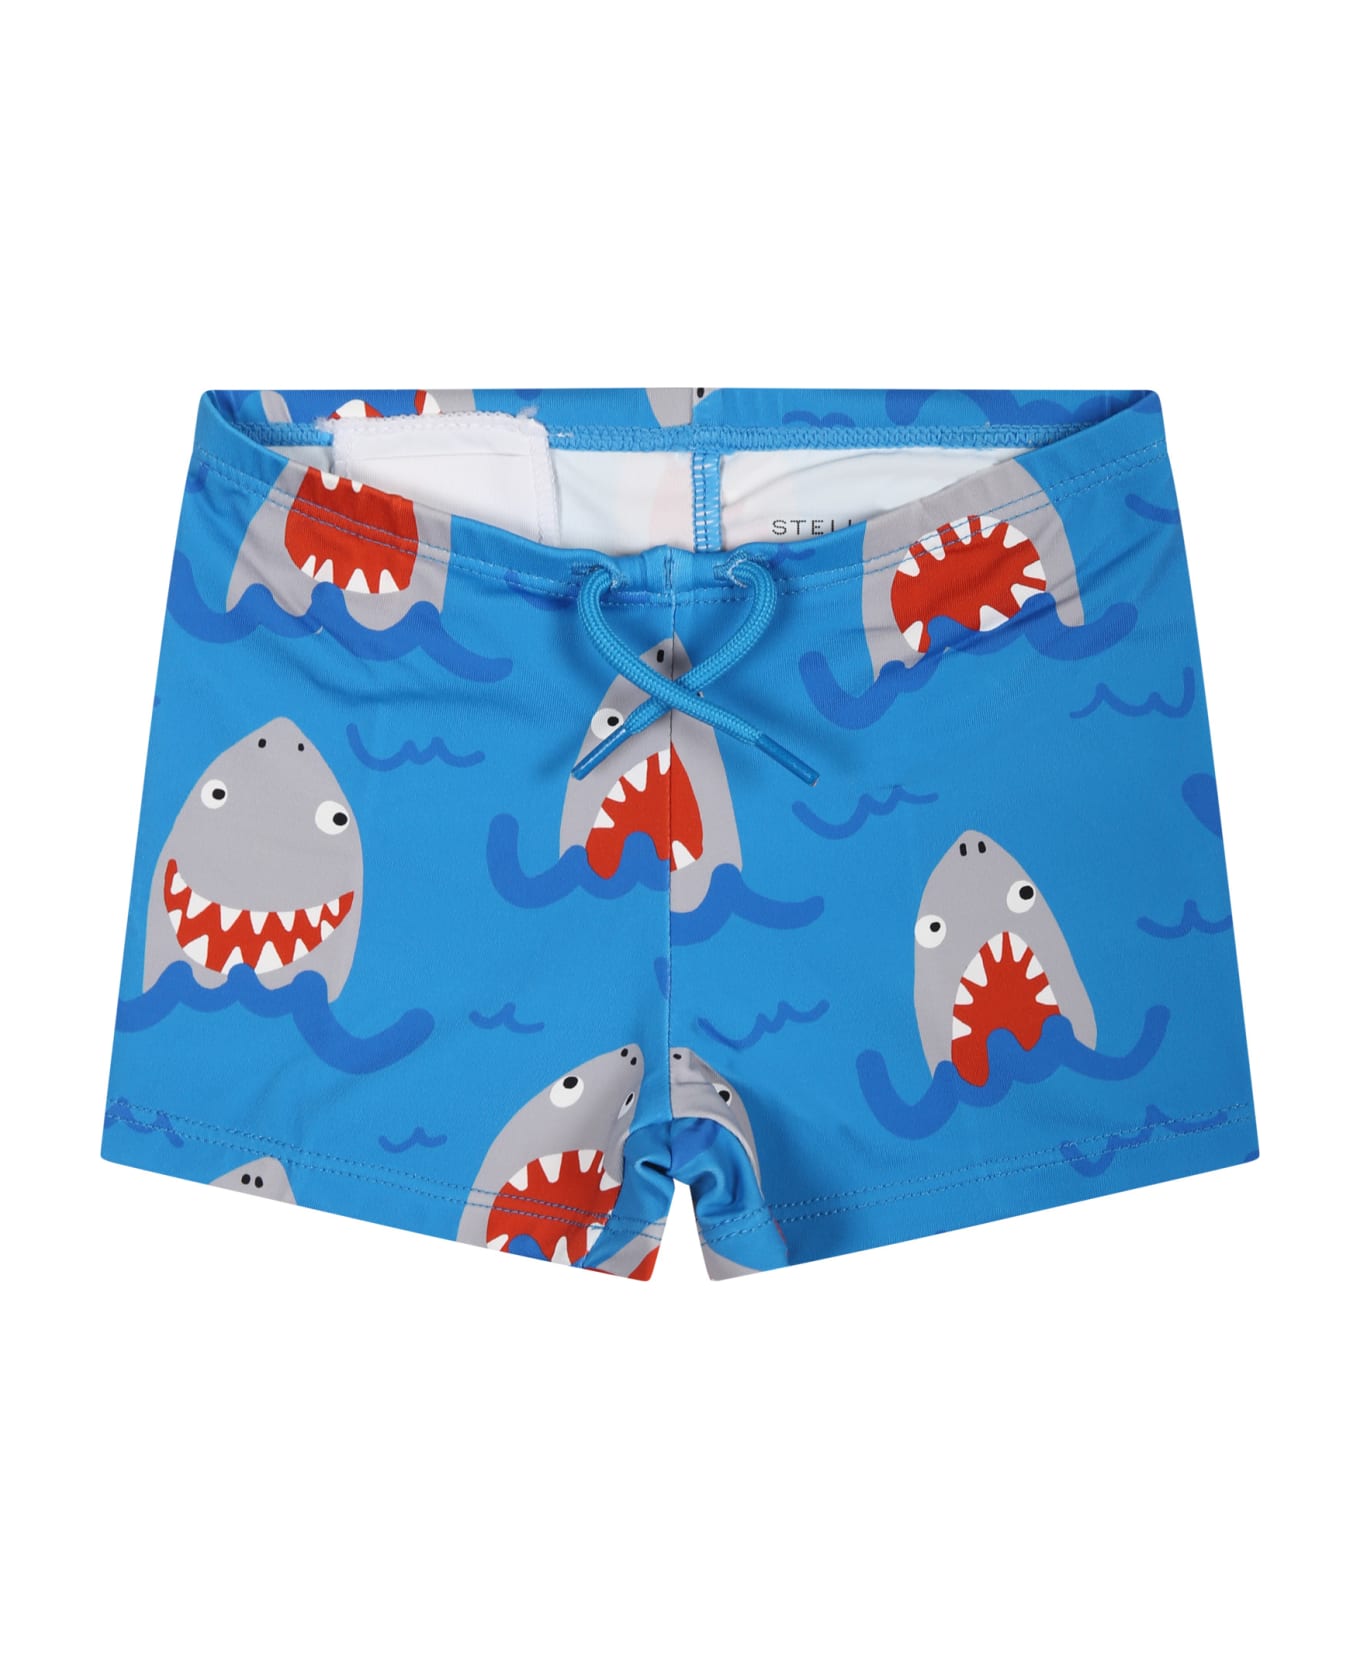 Stella McCartney Kids Light Blue Boxer Shorts For Baby Boy With All-over Shark Print - Light Blue